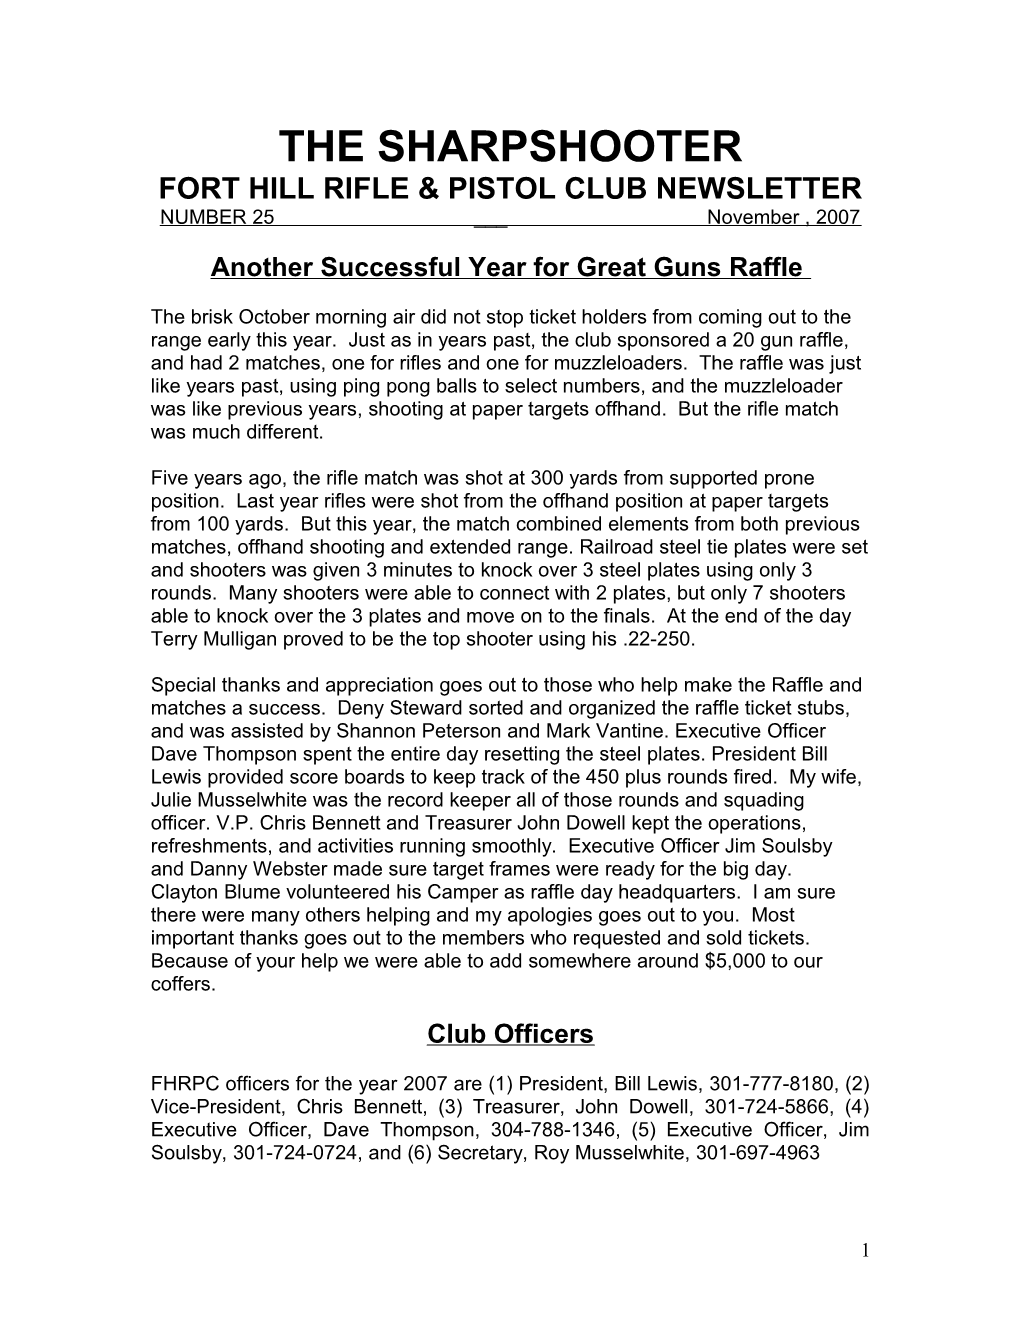 Fort Hill Rifle & Pistol Club Newsletter s2